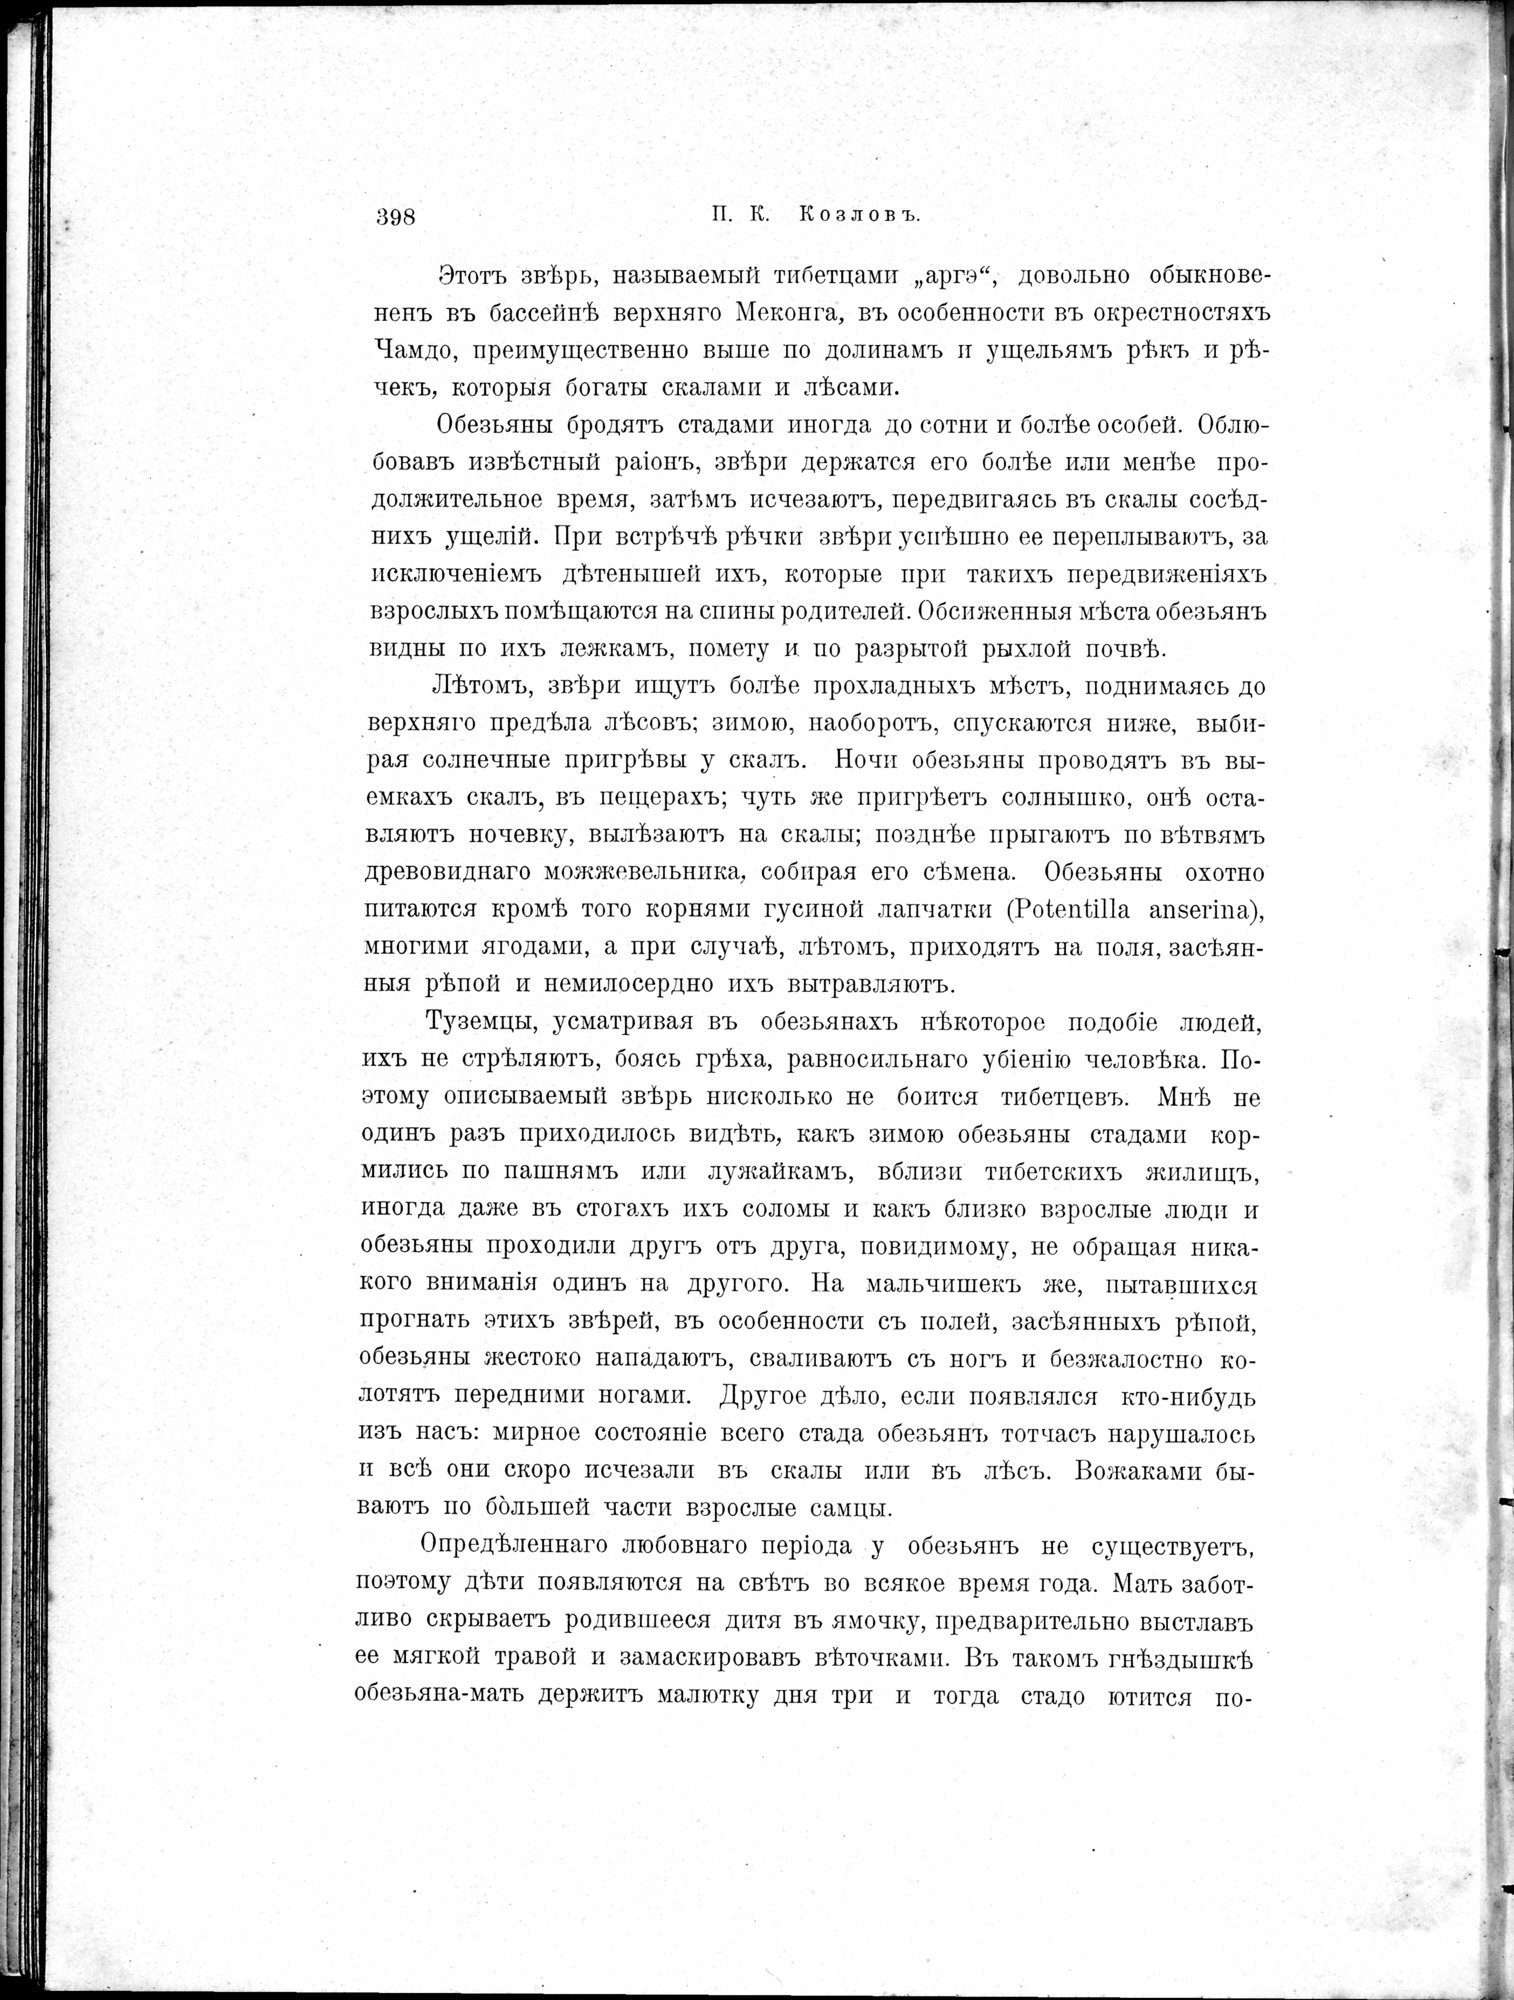 Mongoliia i Kam : vol.2 / Page 190 (Grayscale High Resolution Image)